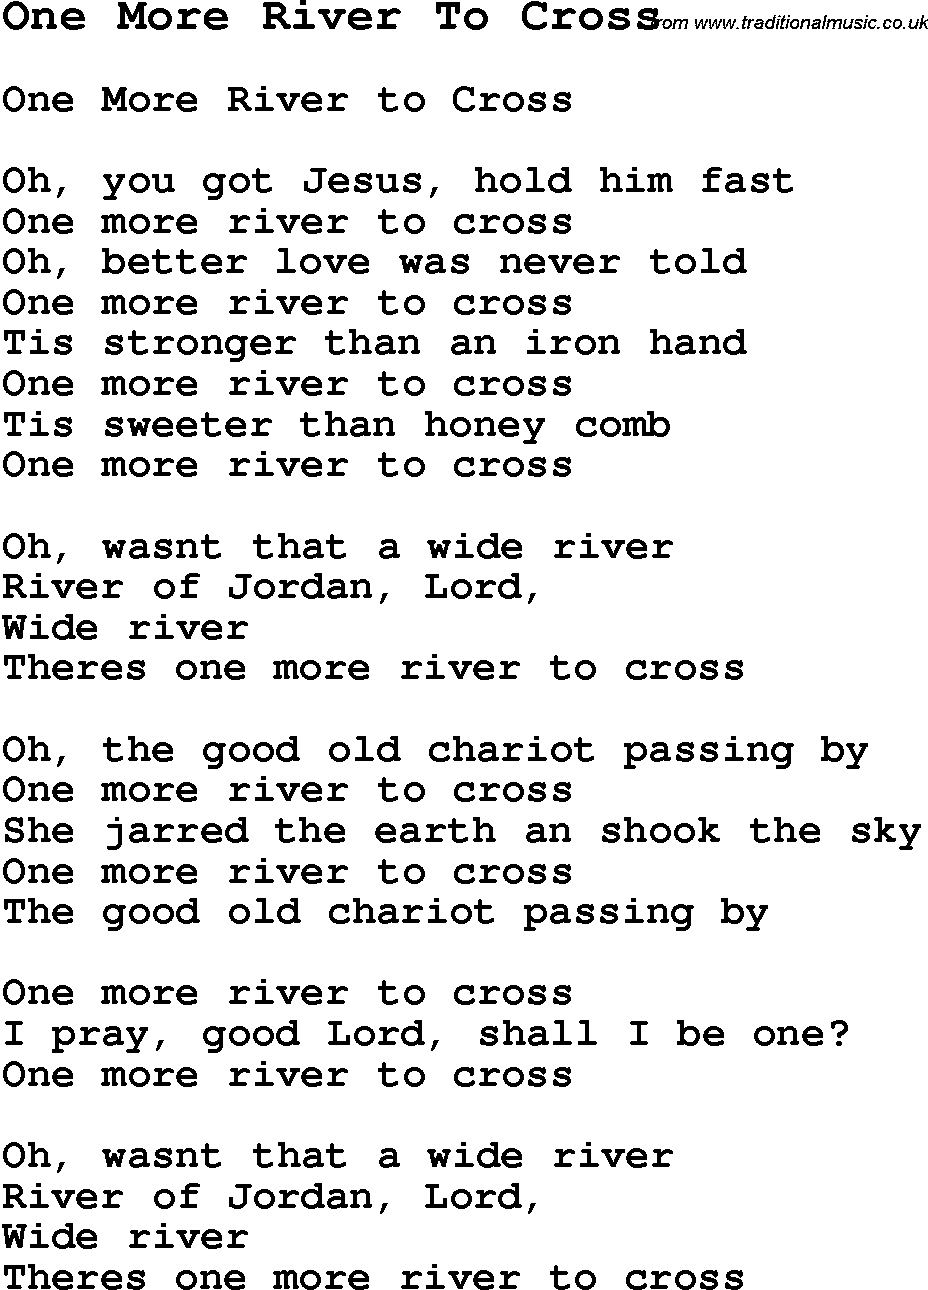 Negro Spiritual Song Lyrics for One More River To Cross